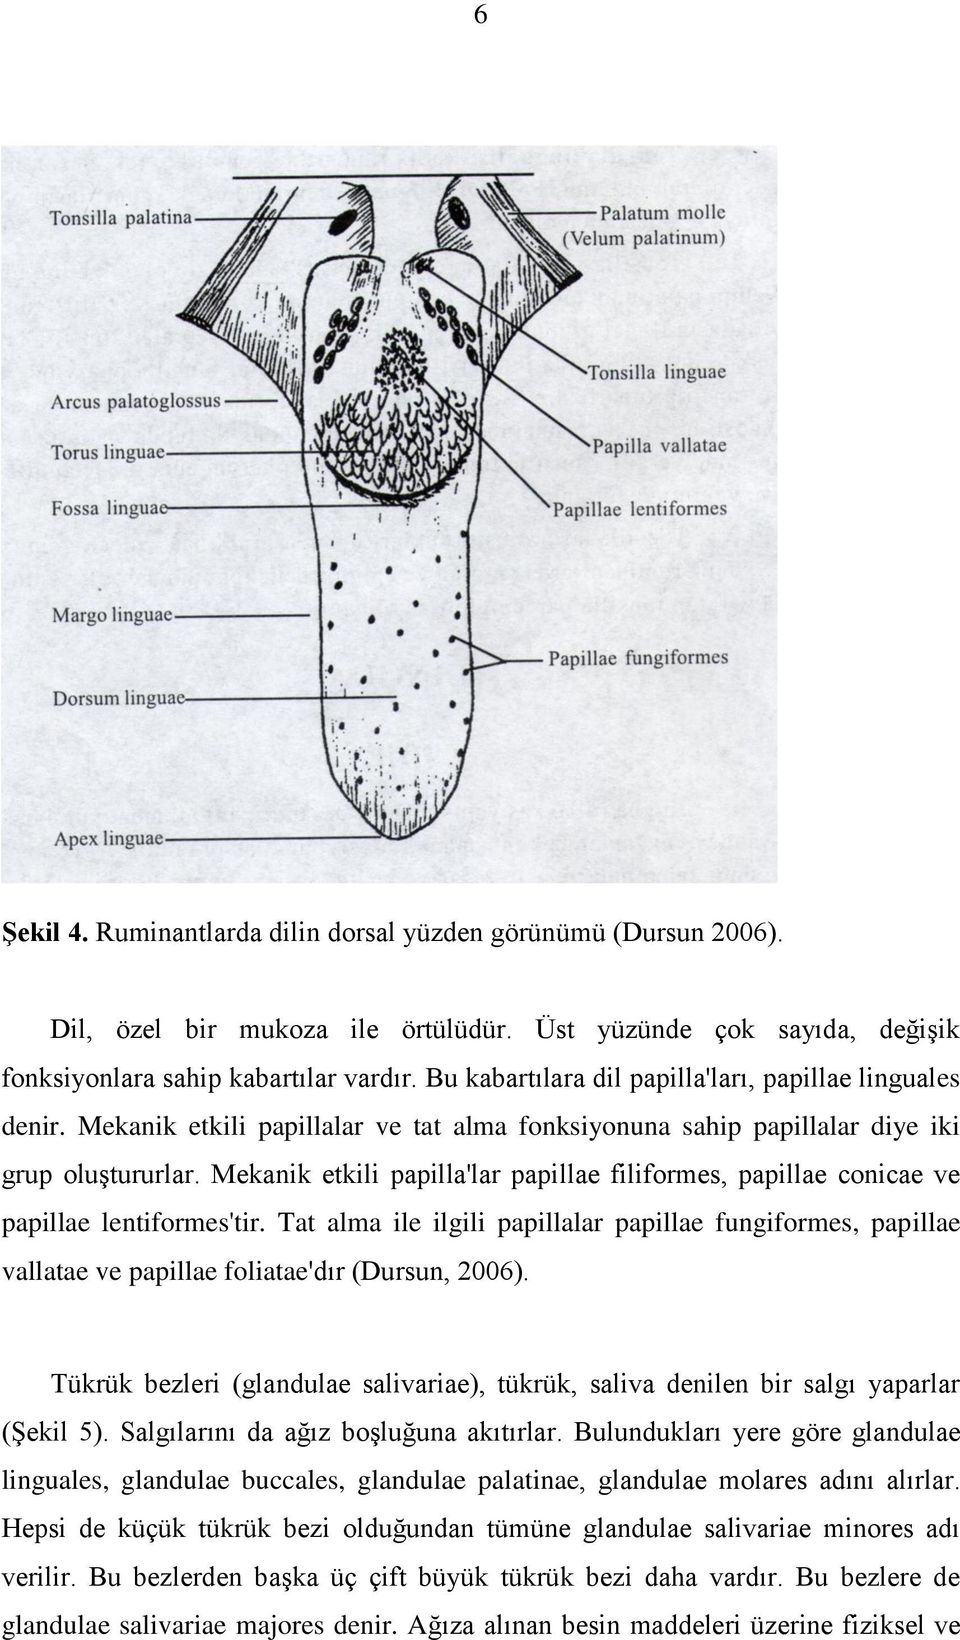 Mekanik etkili papilla'lar papillae filiformes, papillae conicae ve papillae lentiformes'tir.